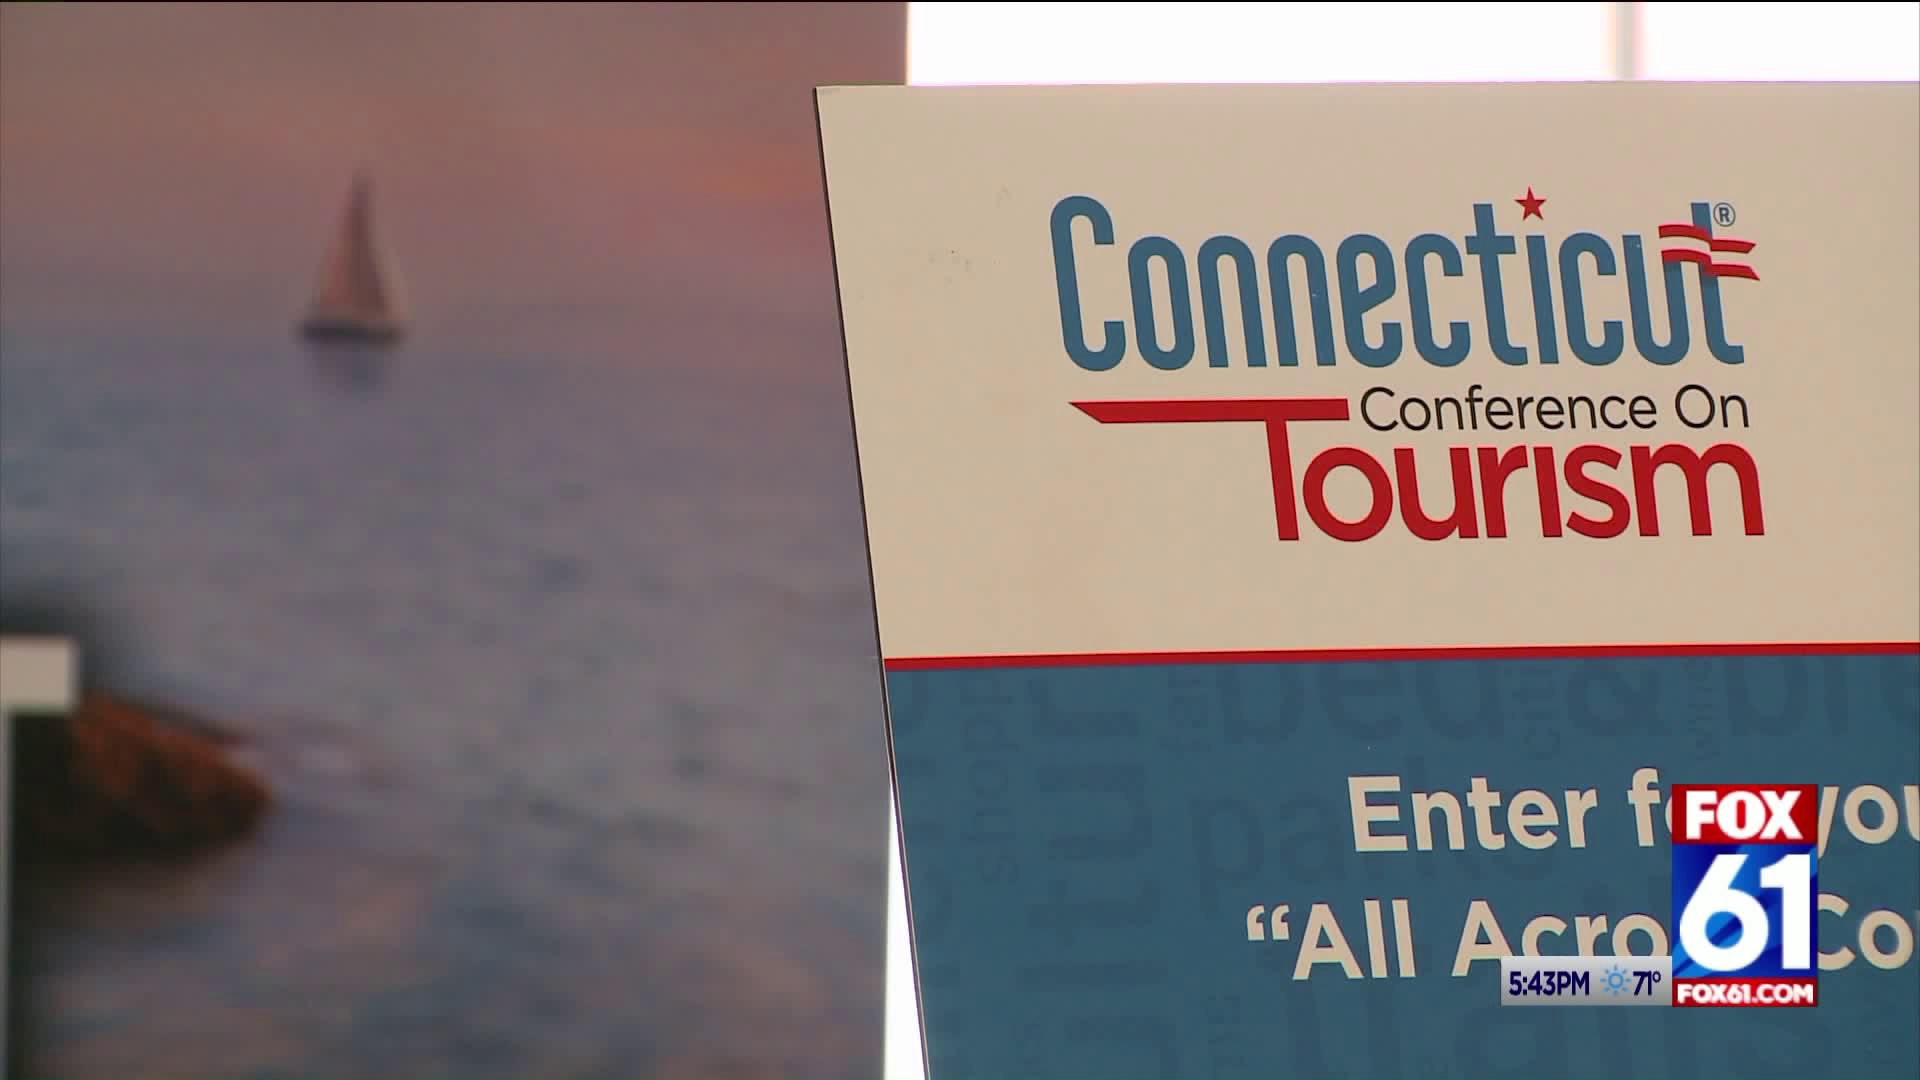 Connecticut Conference on Tourism